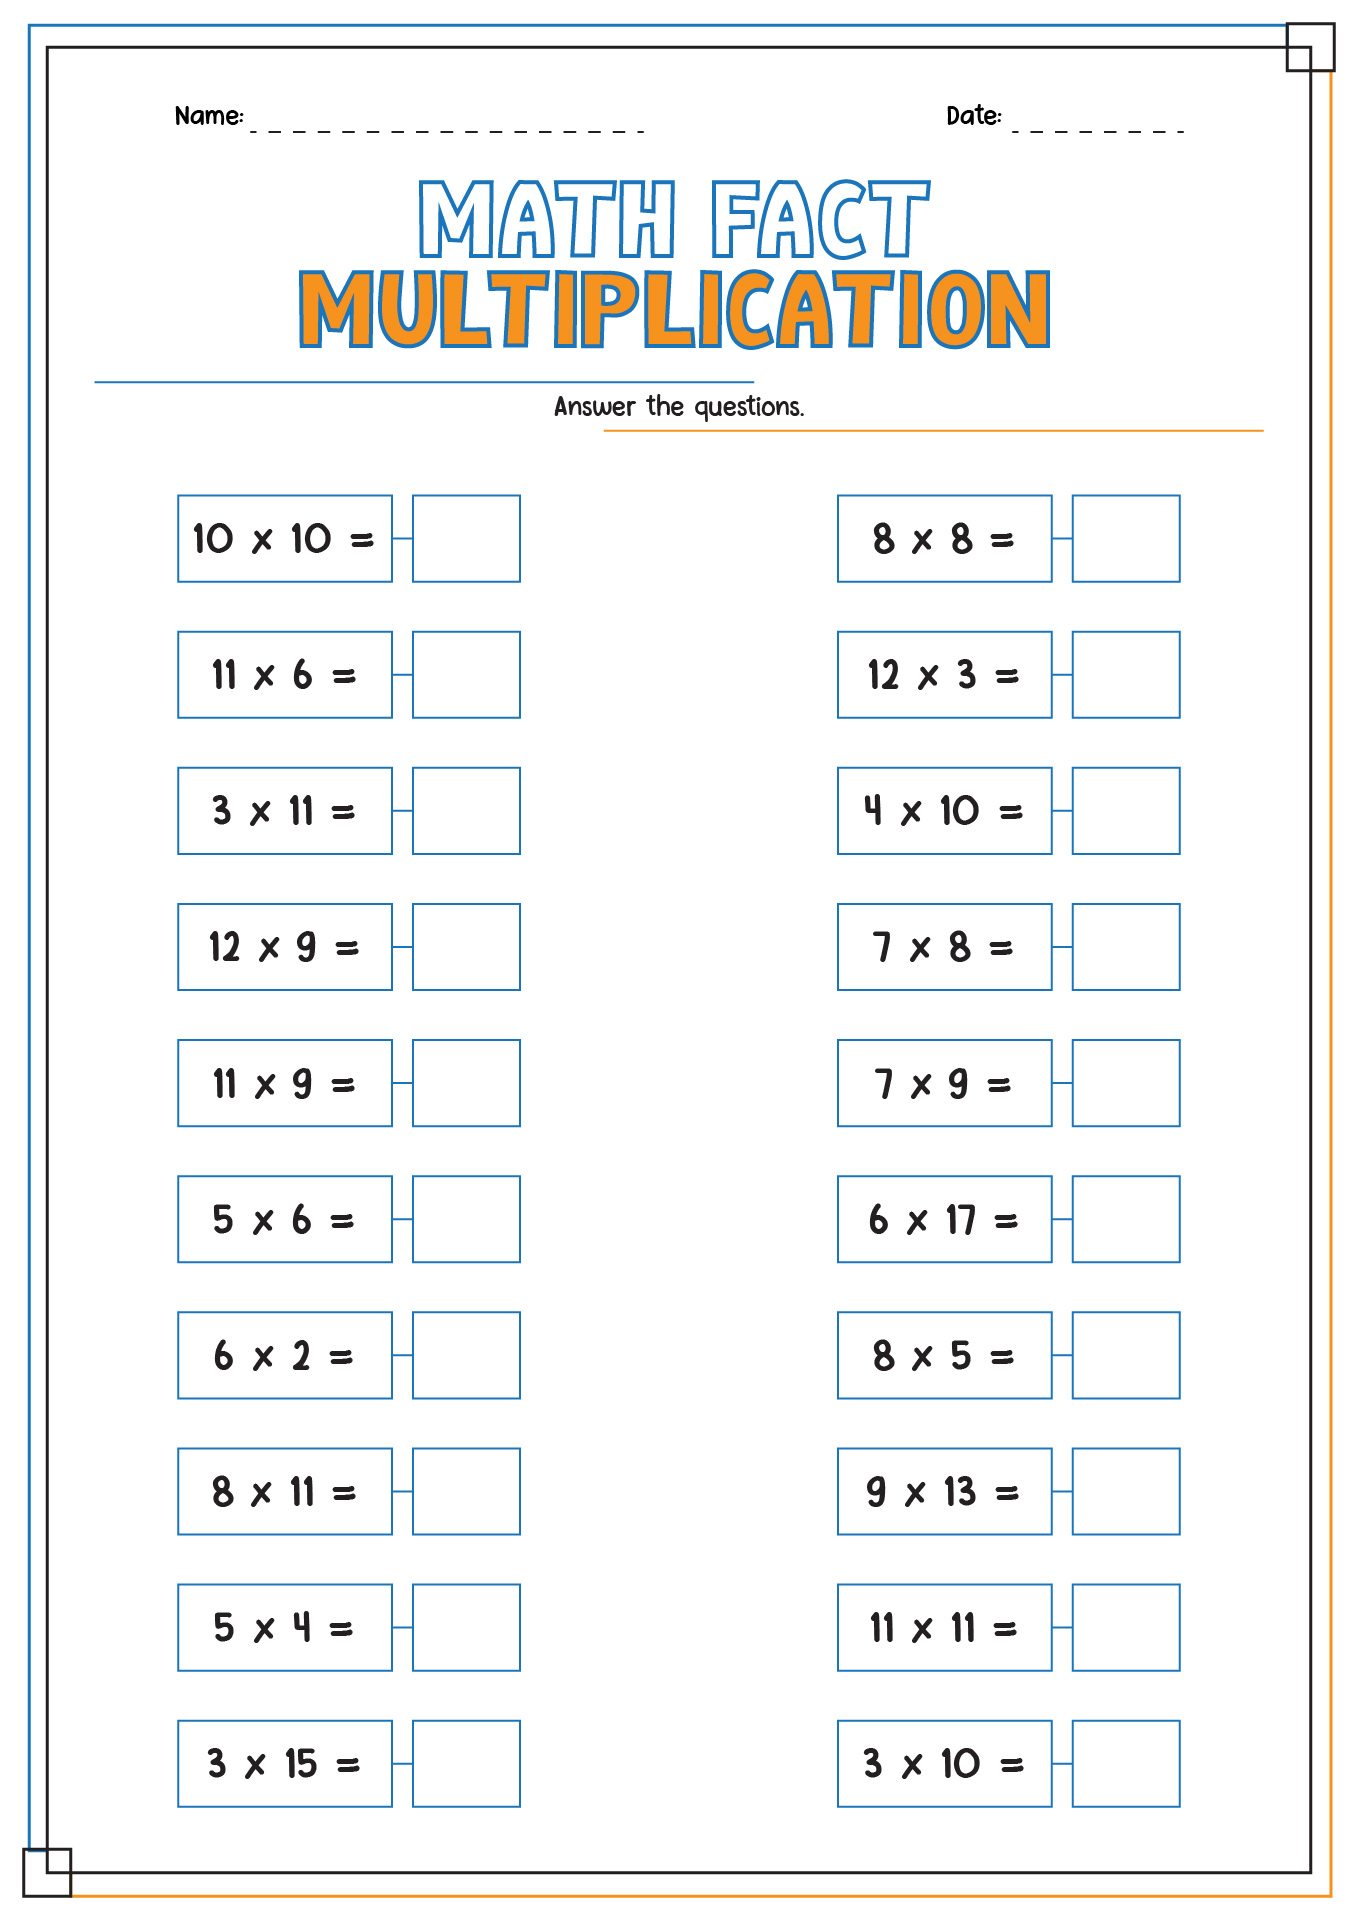 14 Best Images of Hard Multiplication Worksheets 100 Problems - Math